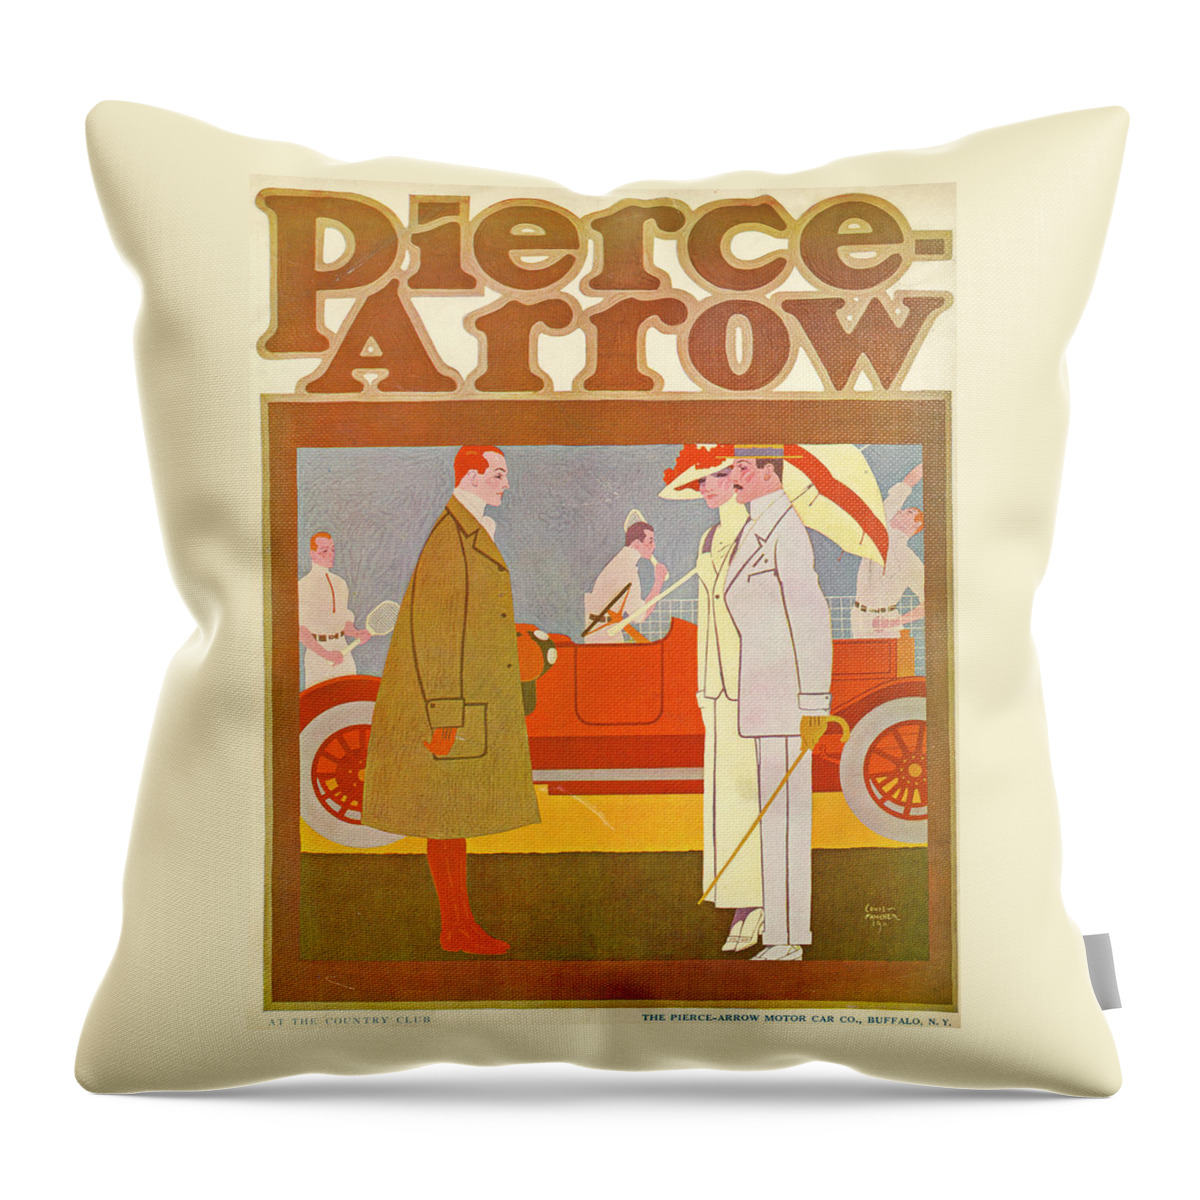 Advertisement Throw Pillow featuring the mixed media Pierce-Arrow Advertisement by Louis Fancher